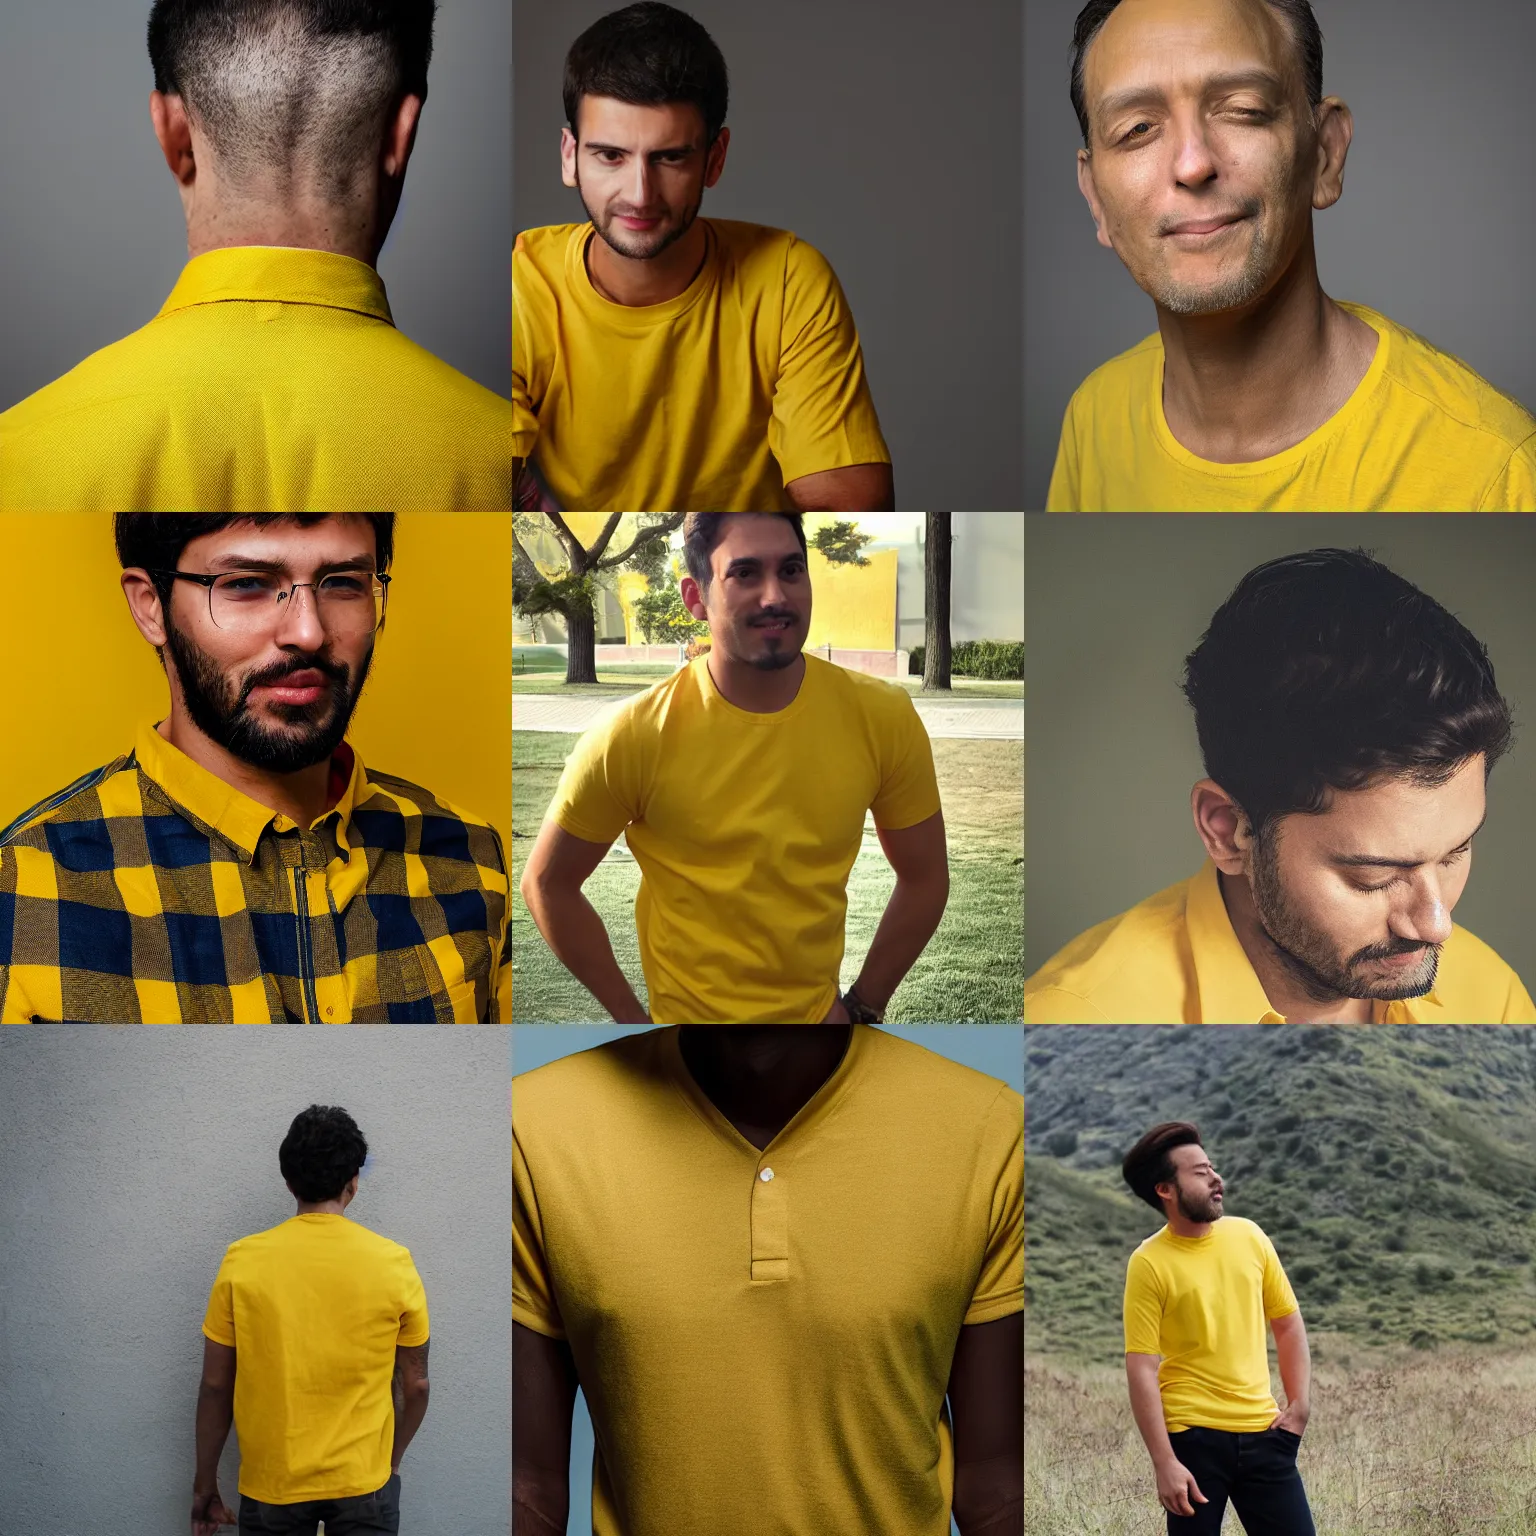 Prompt: a long shot (LS) of a man wearing yellow shirt